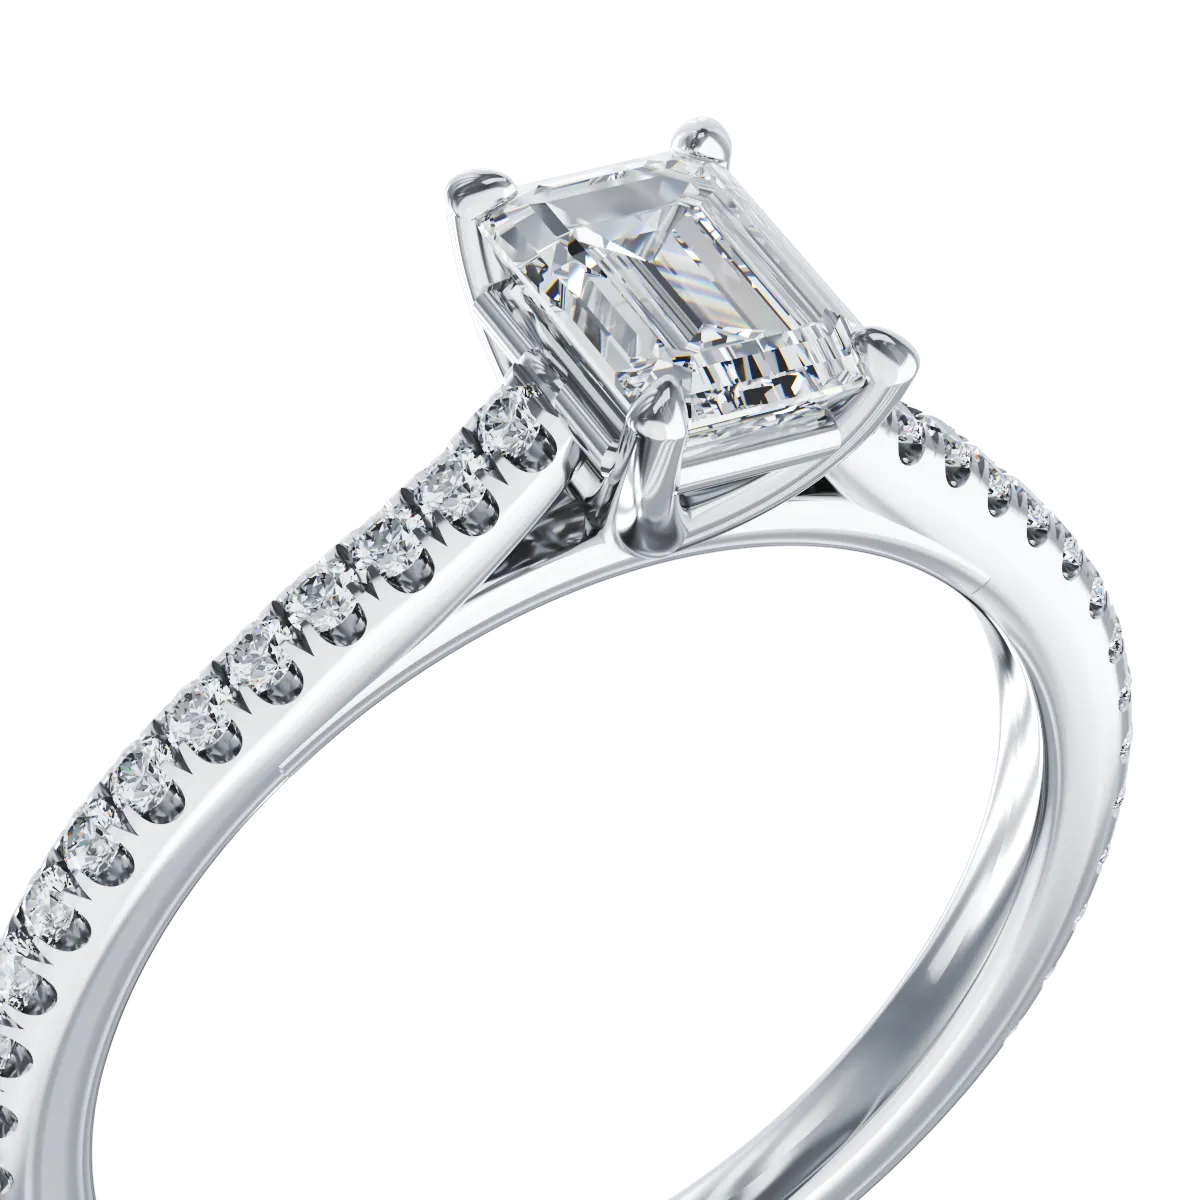 Platinum engagement ring with 0.61ct diamond and 0.2ct diamonds